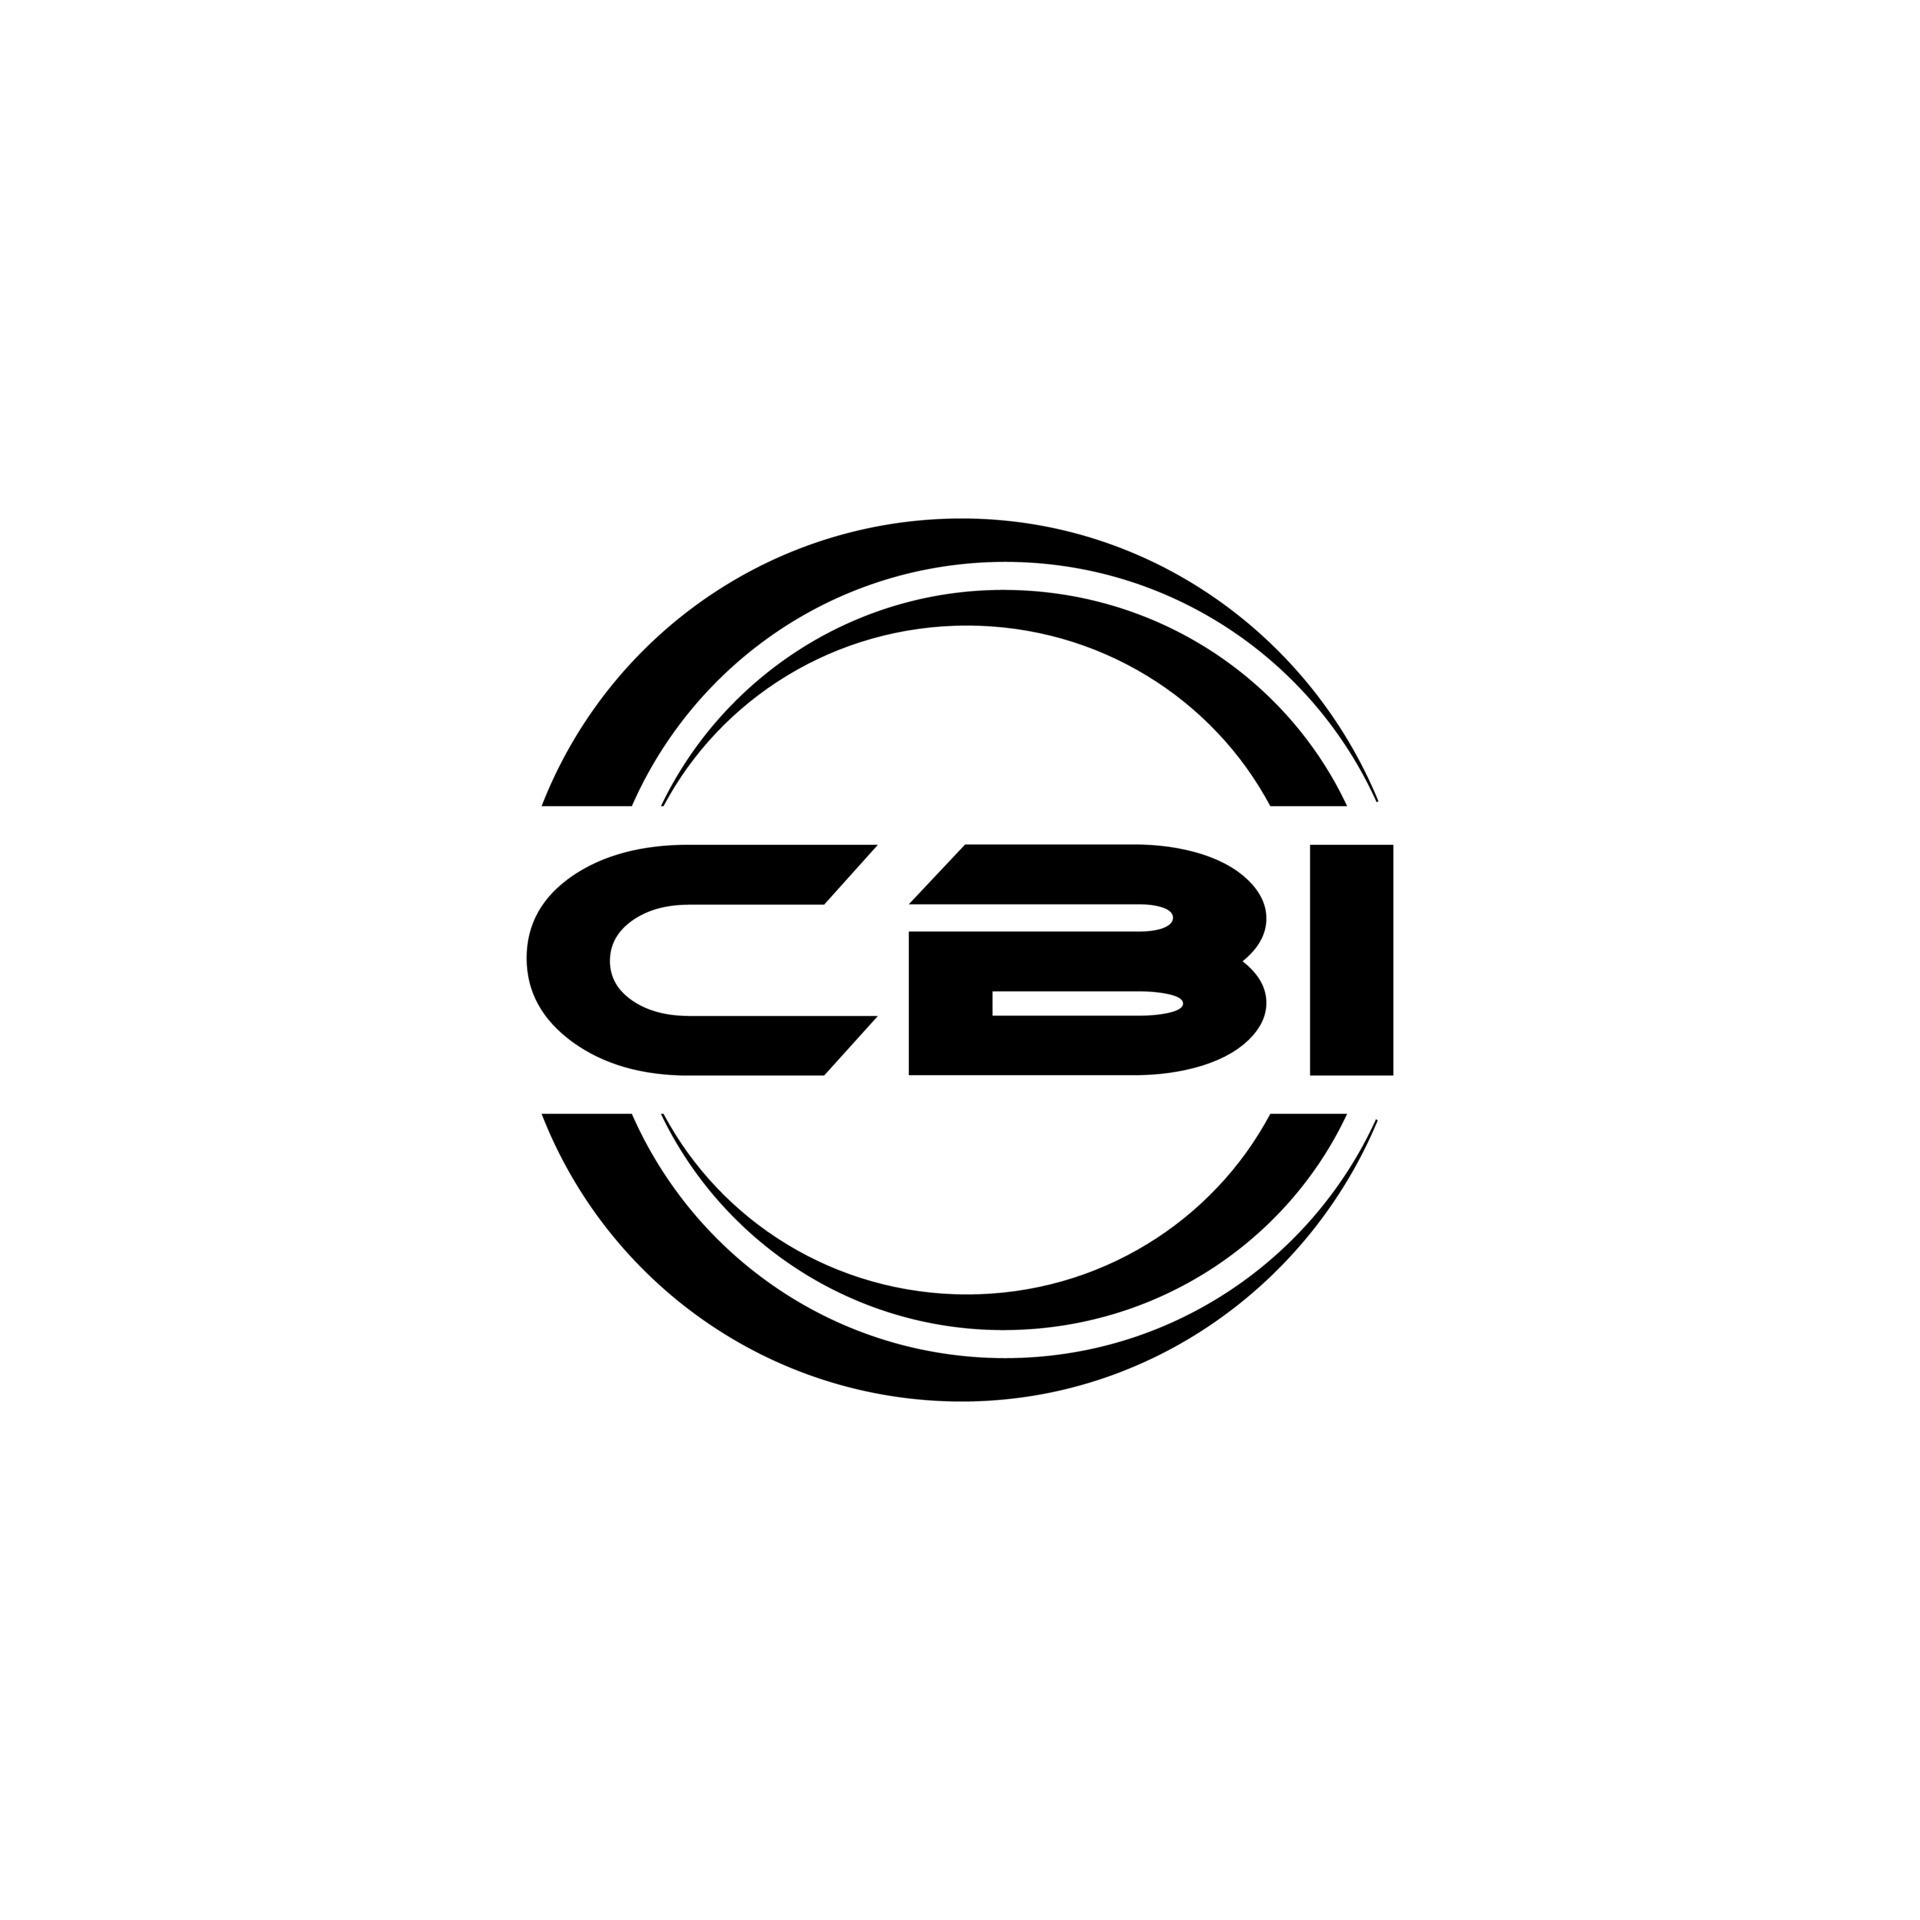 Cbi logo Black and White Stock Photos & Images - Alamy-cheohanoi.vn